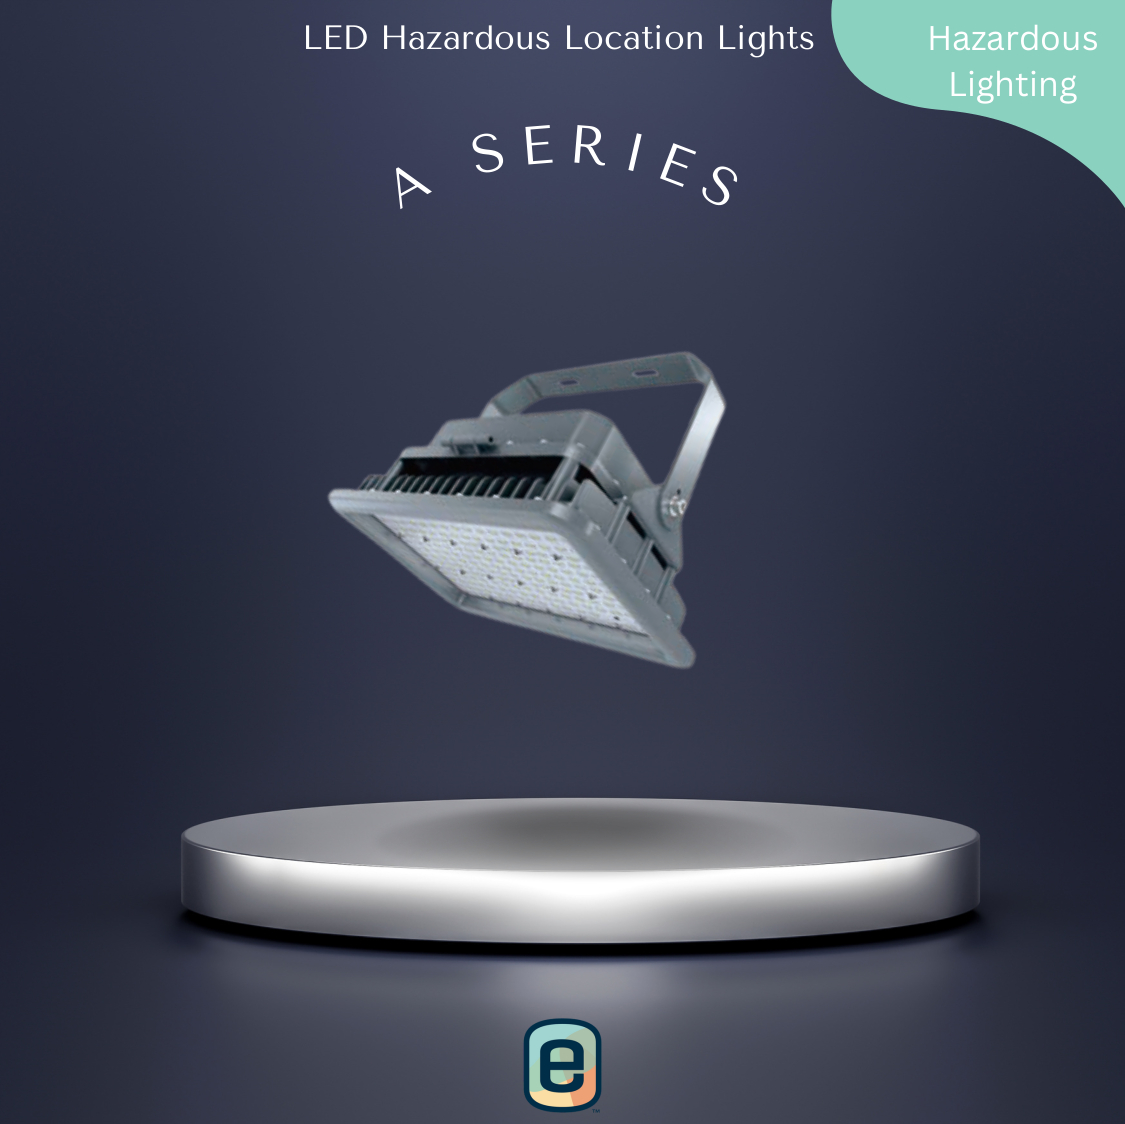 LED Hazardous Location Lights: A Series